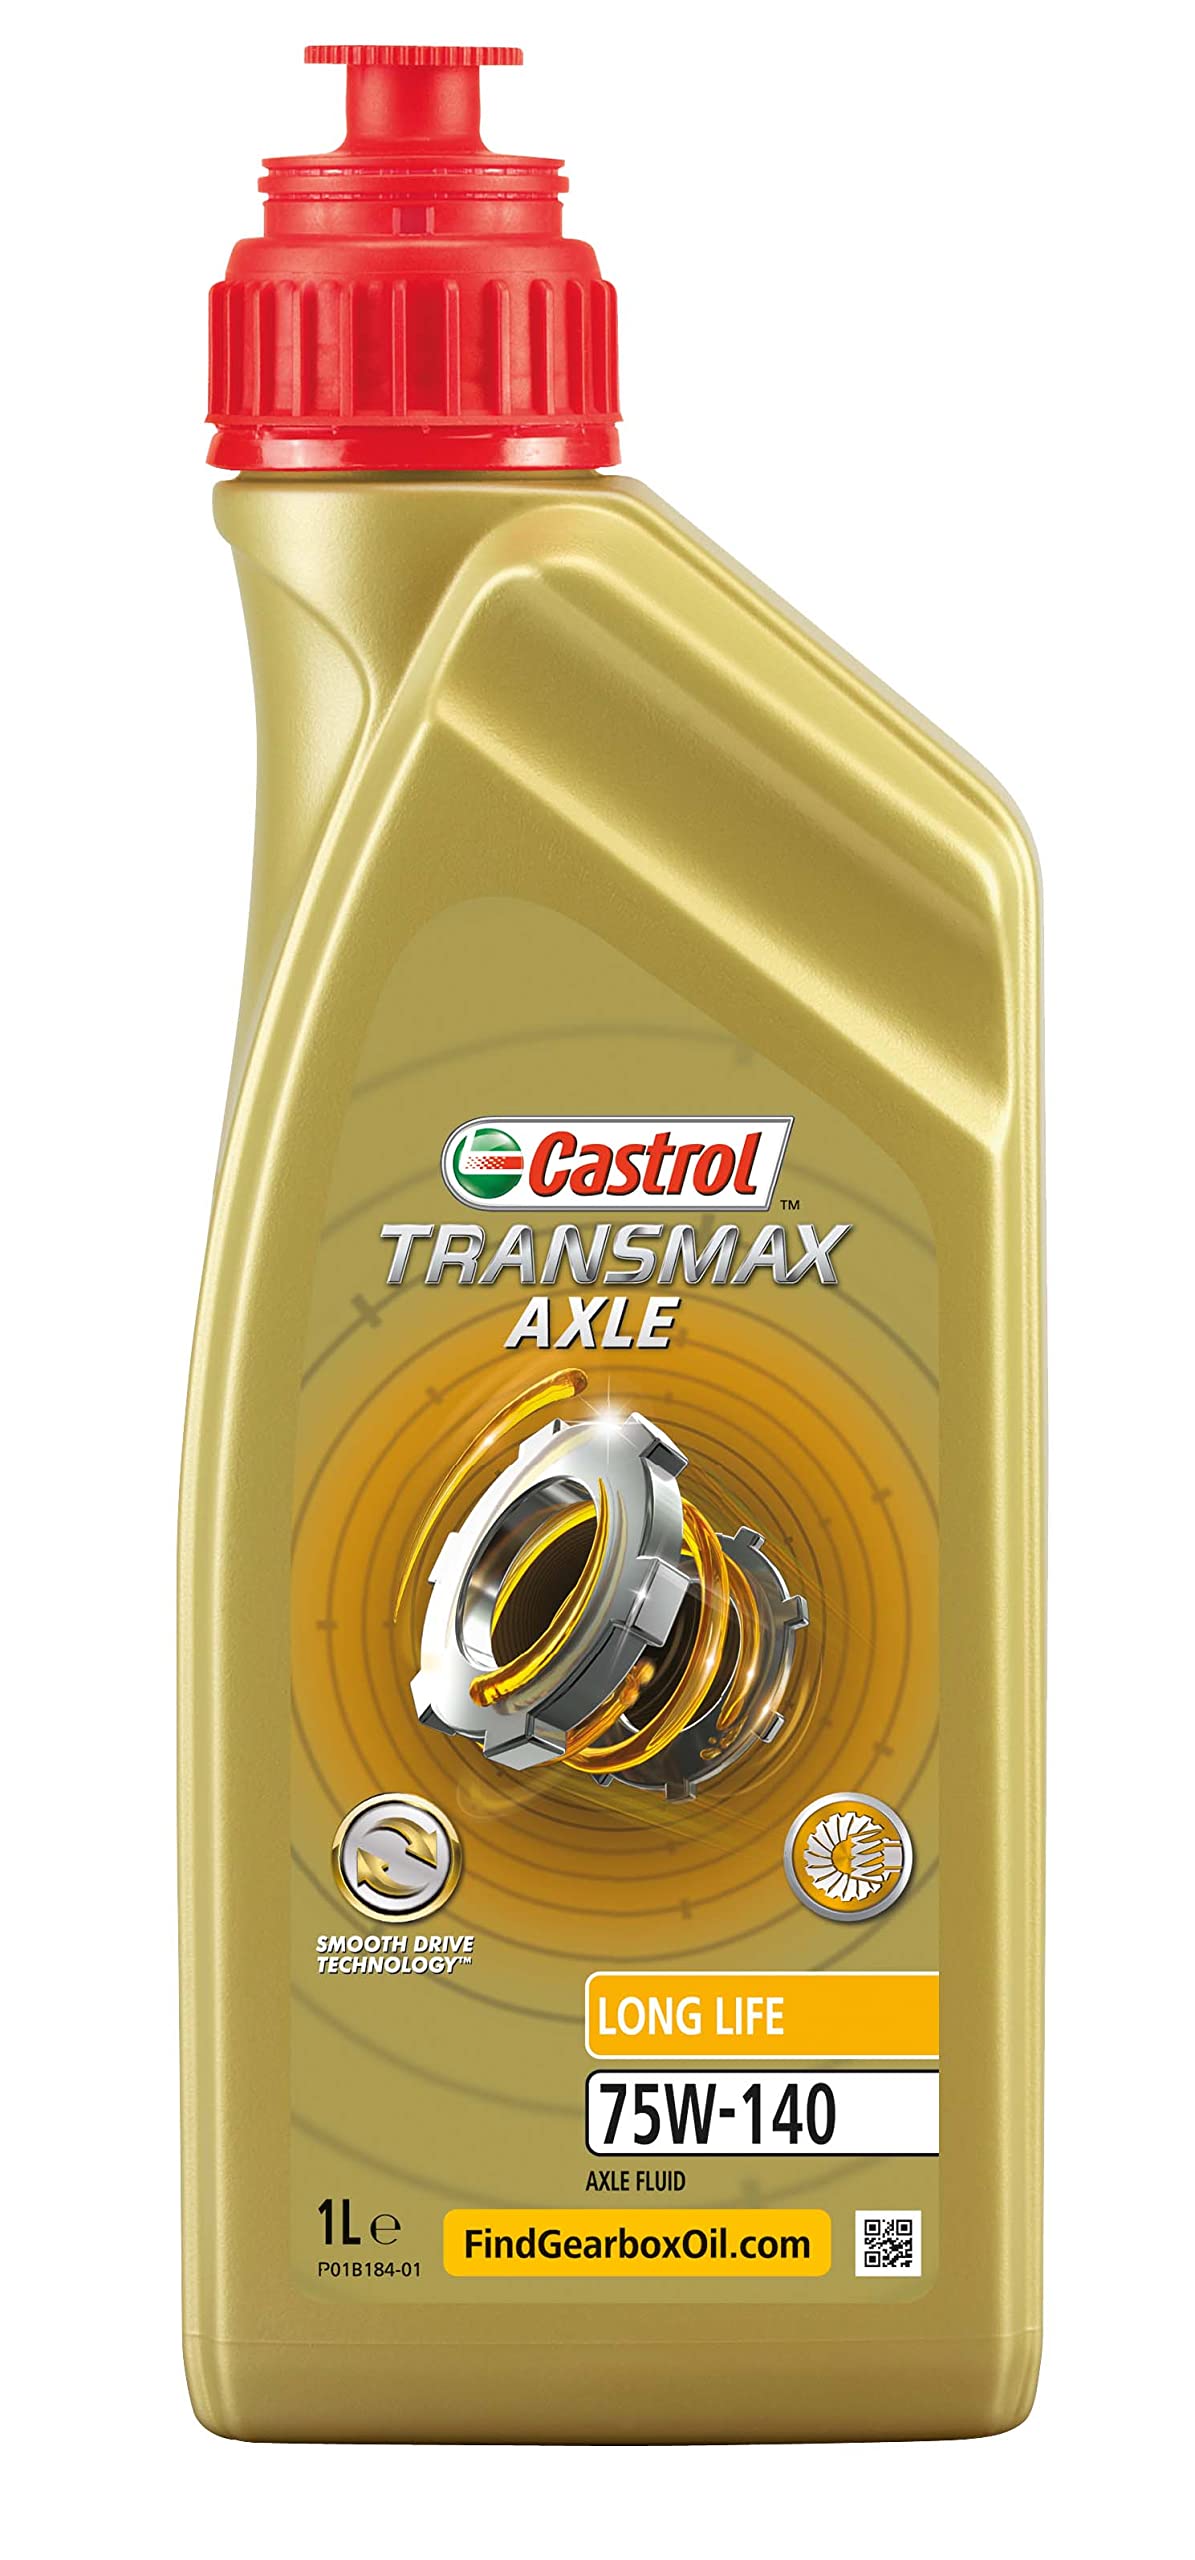 Castrol TRANSMAX Axle Long Life 75W-140, 1 Liter von Castrol